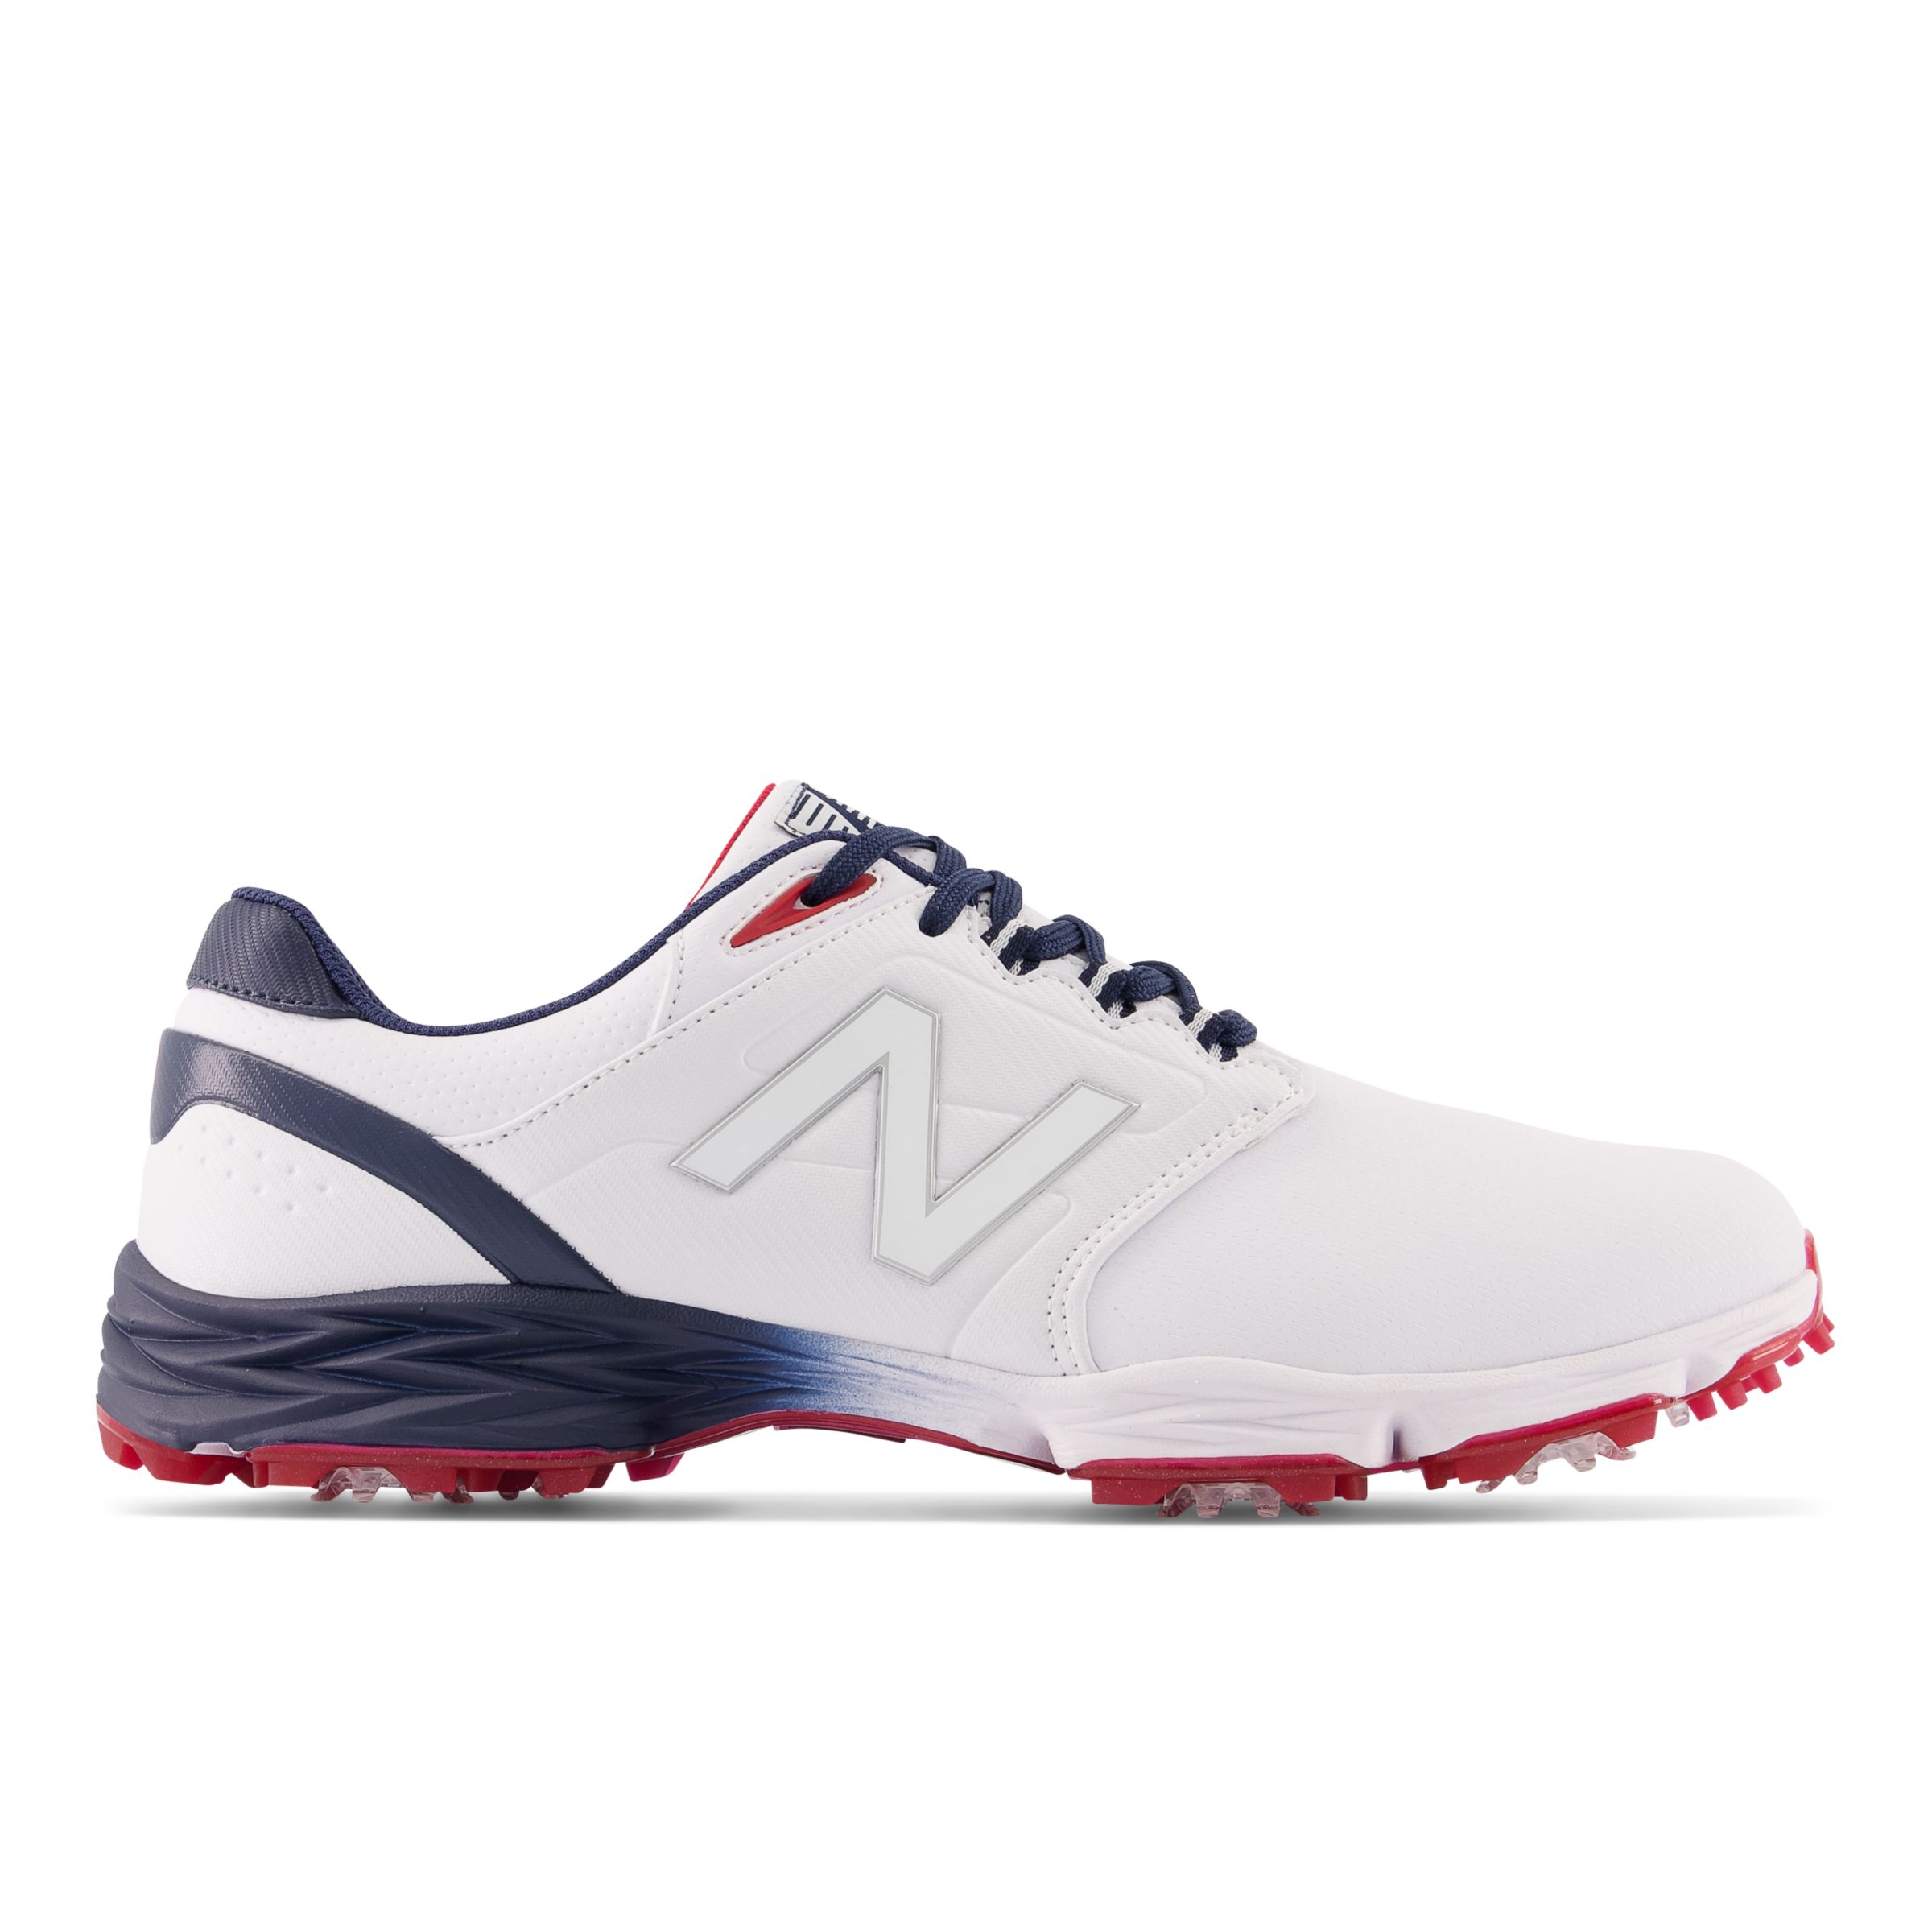 

New Balance Men's Striker v3 Golf Shoes White/Blue - White/Blue